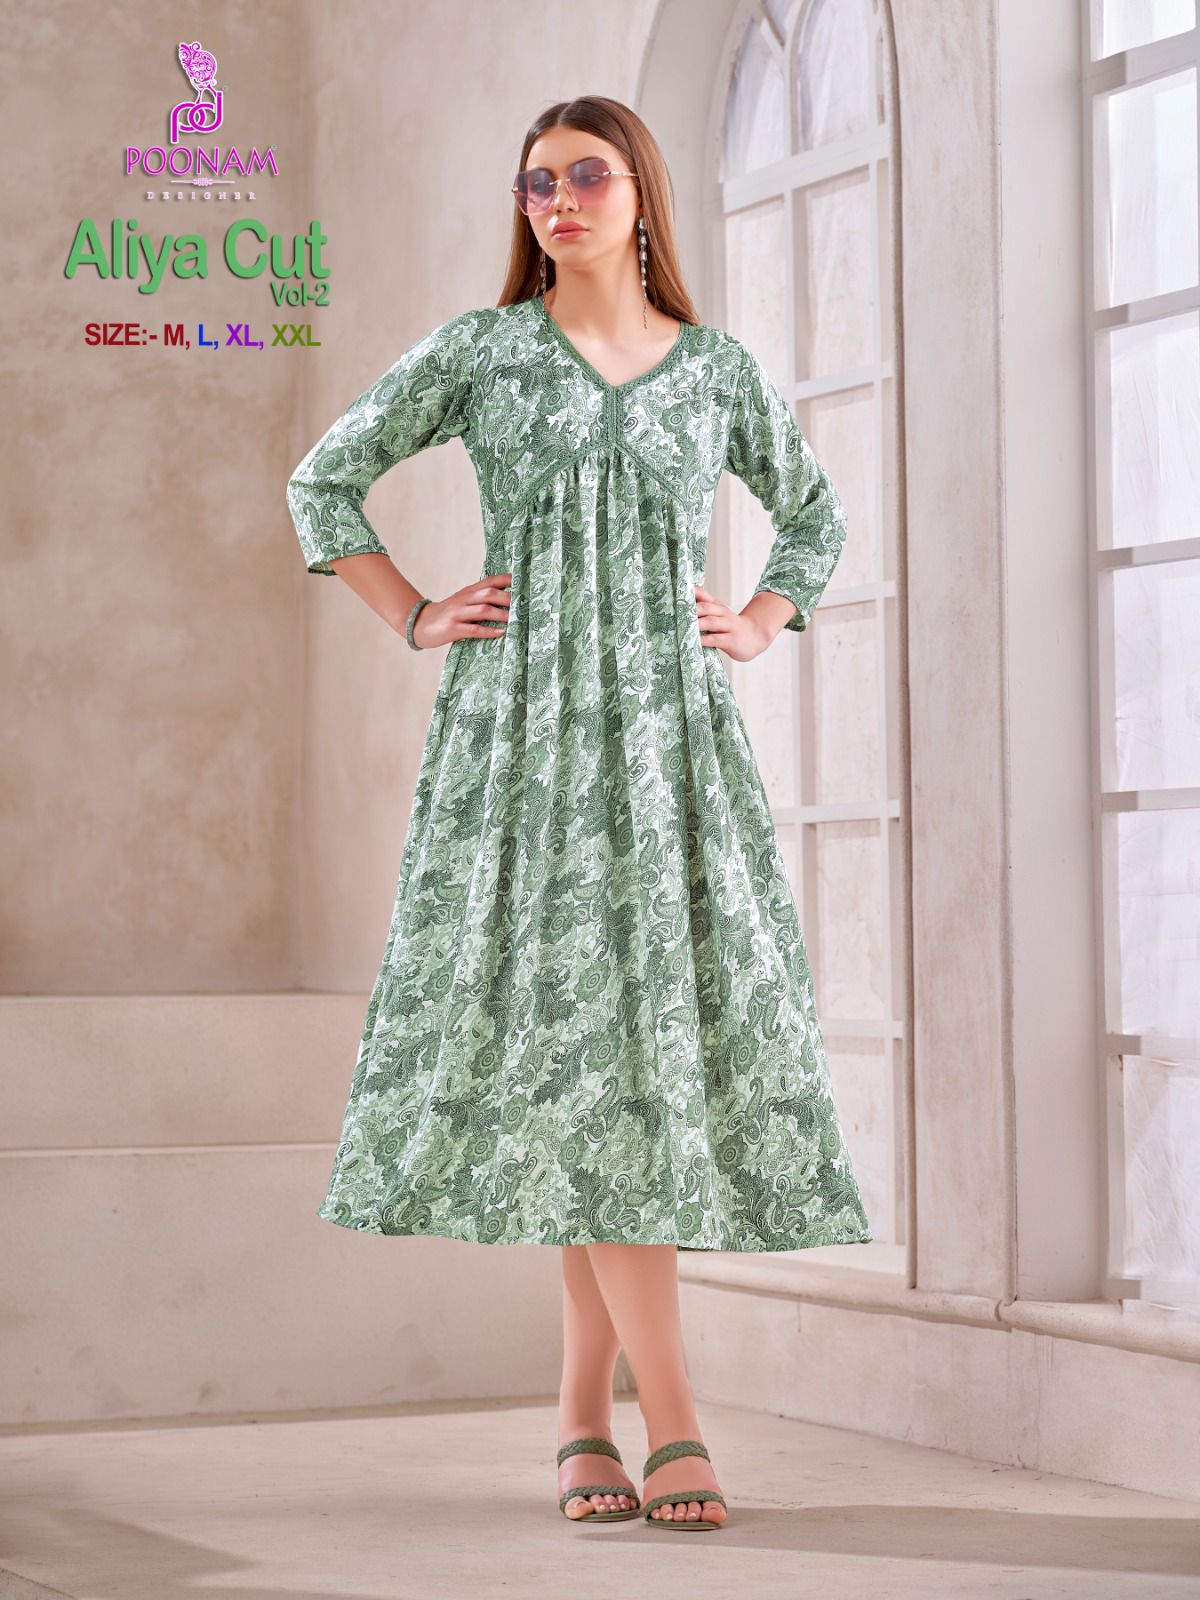 Poonam Designer Aliya Cut 1002